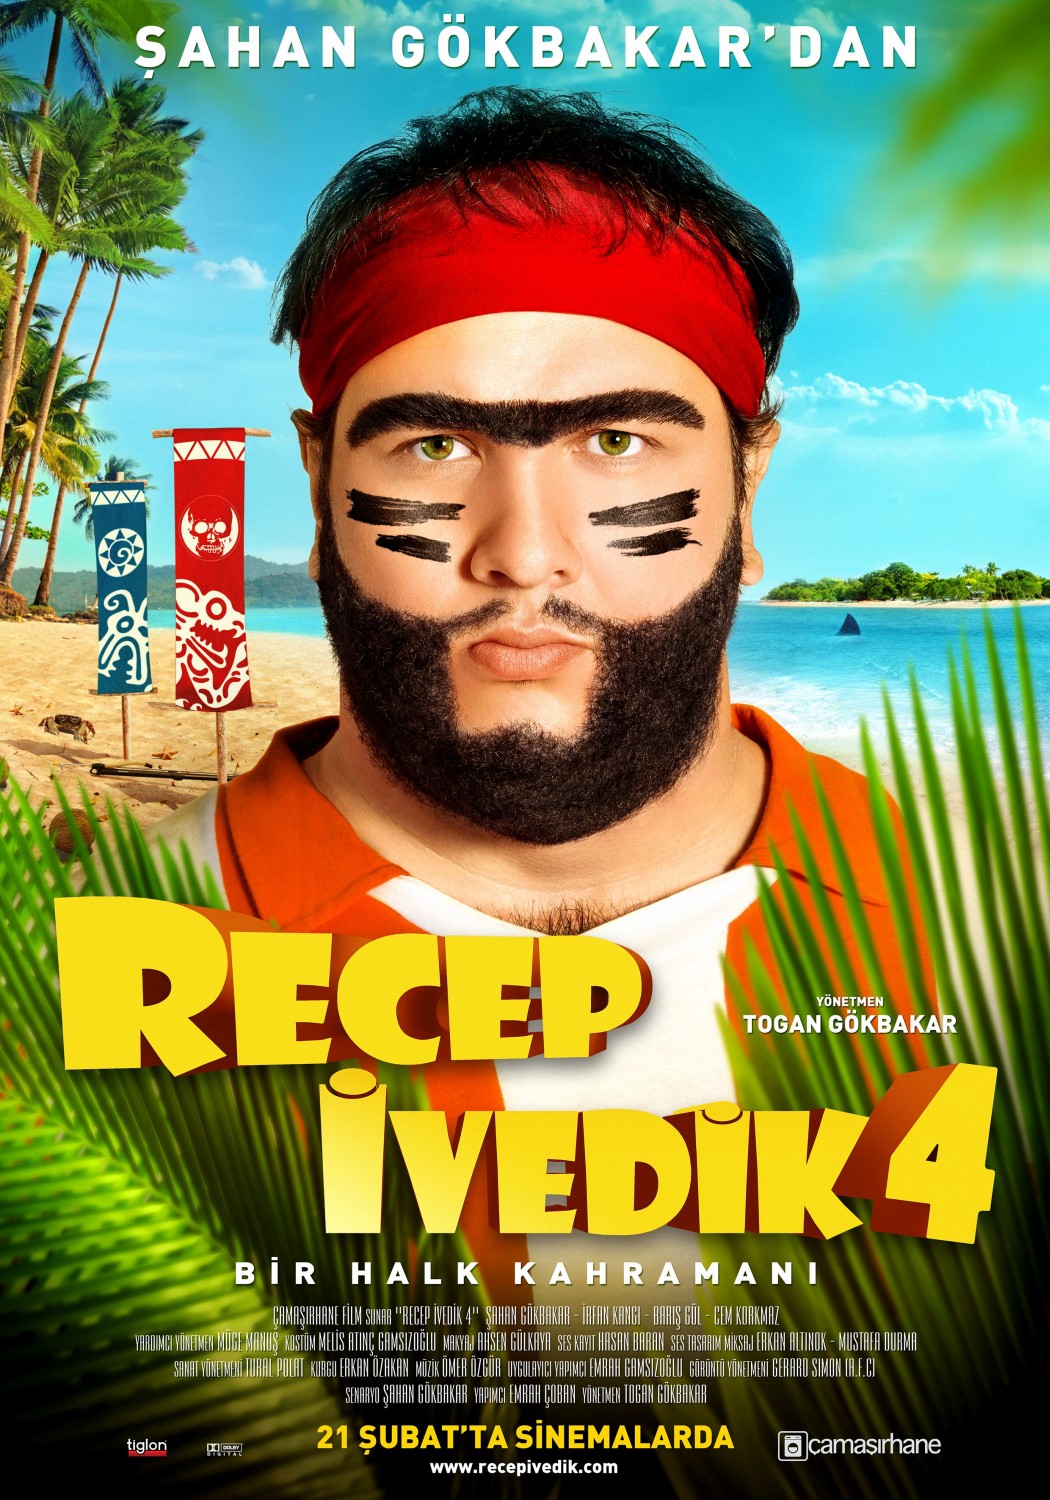 Extra Large Movie Poster Image for Recep Ivedik 4 